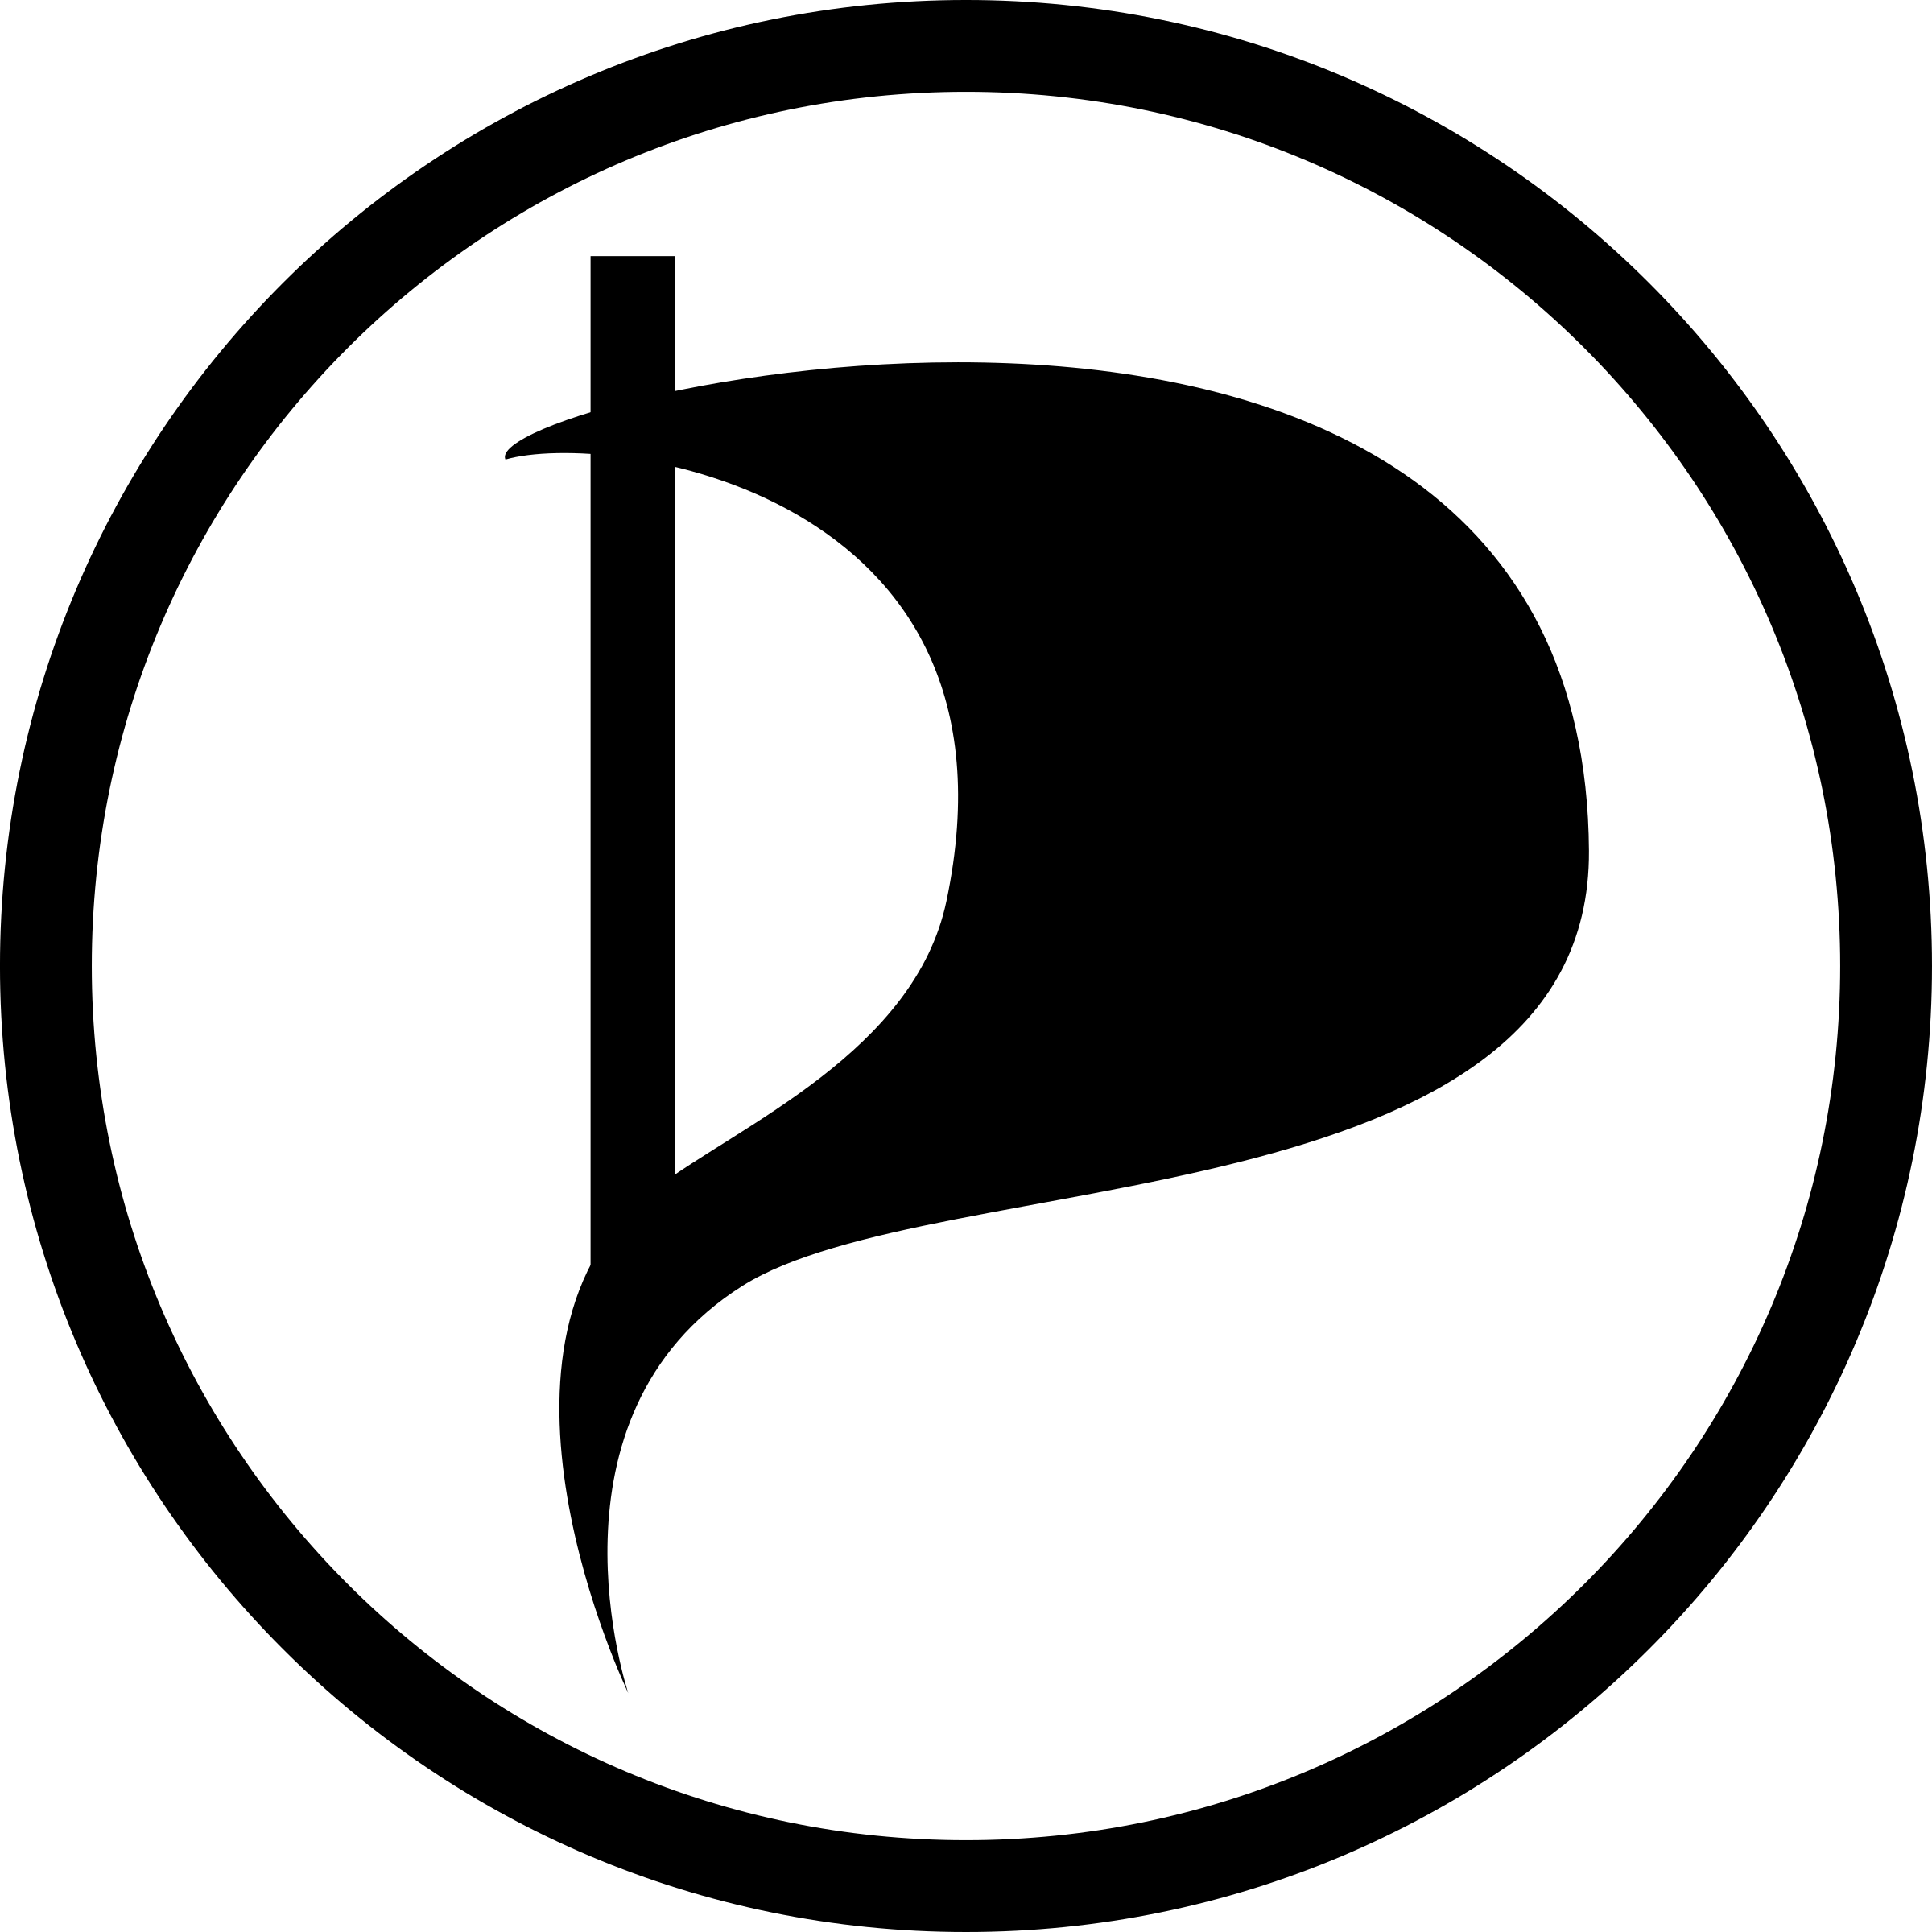 Pirate Party Logo (1400x1400)